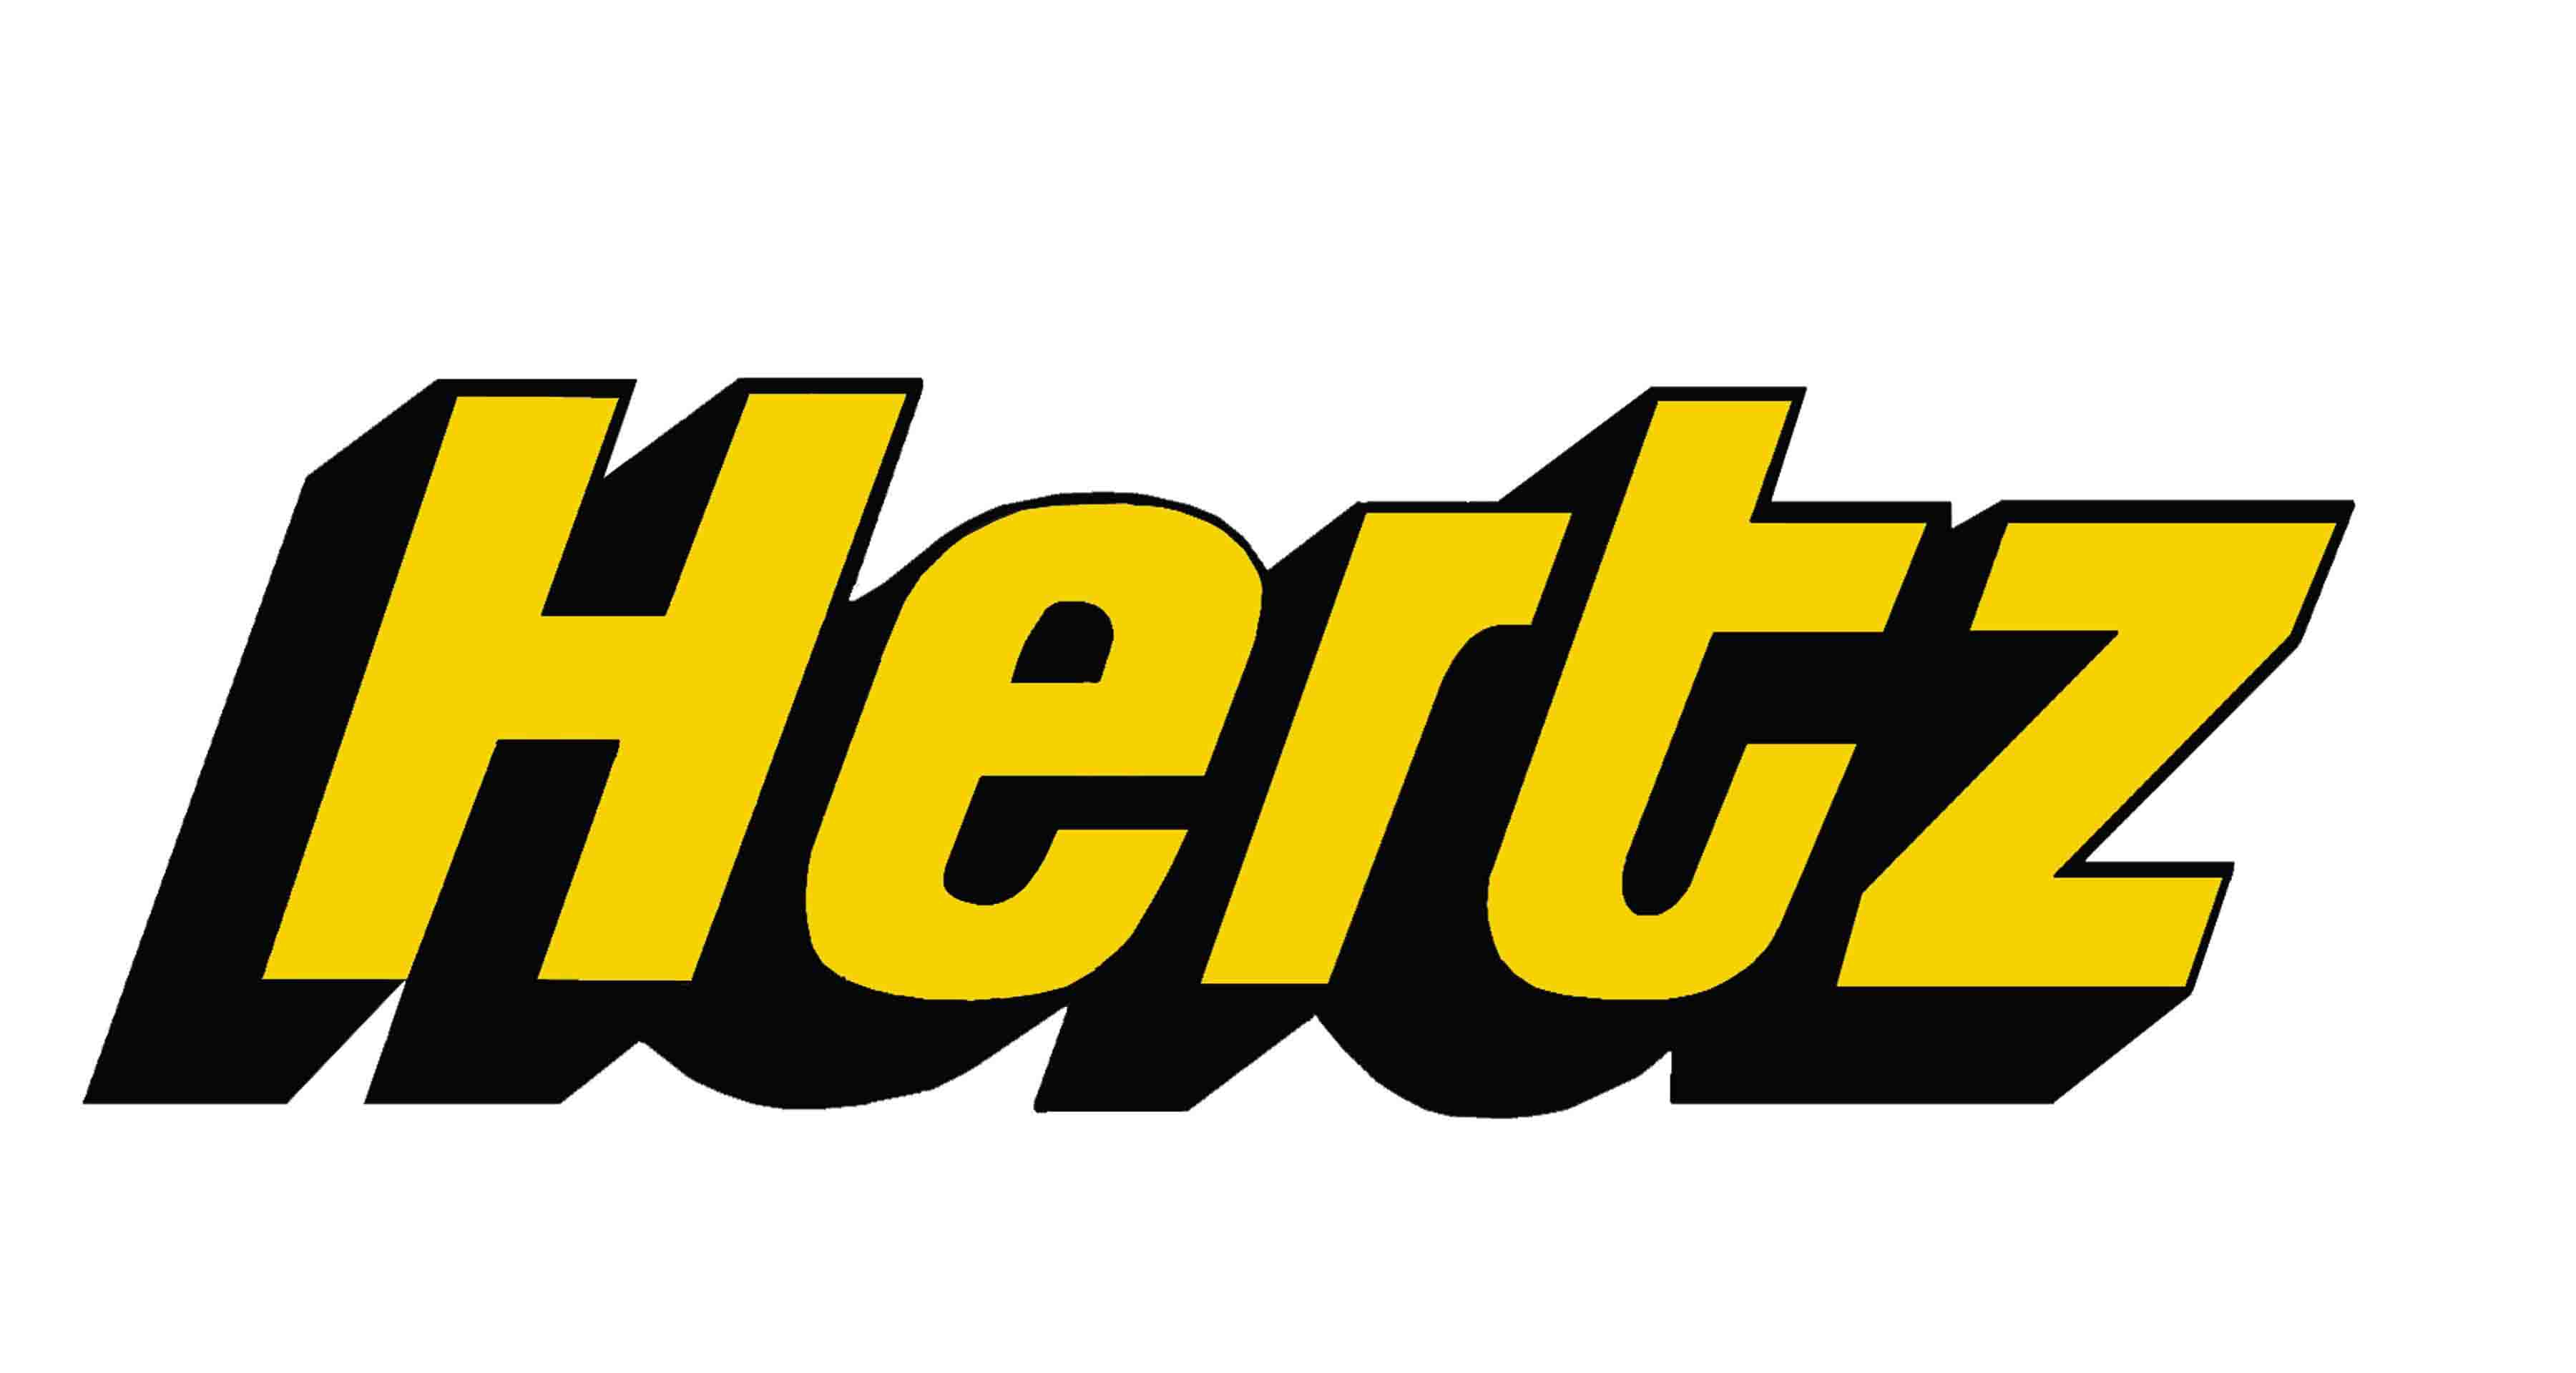 Hertz Corporation Logo - Hertz Car Rental - Laramie, Wyoming | Discover information on ...